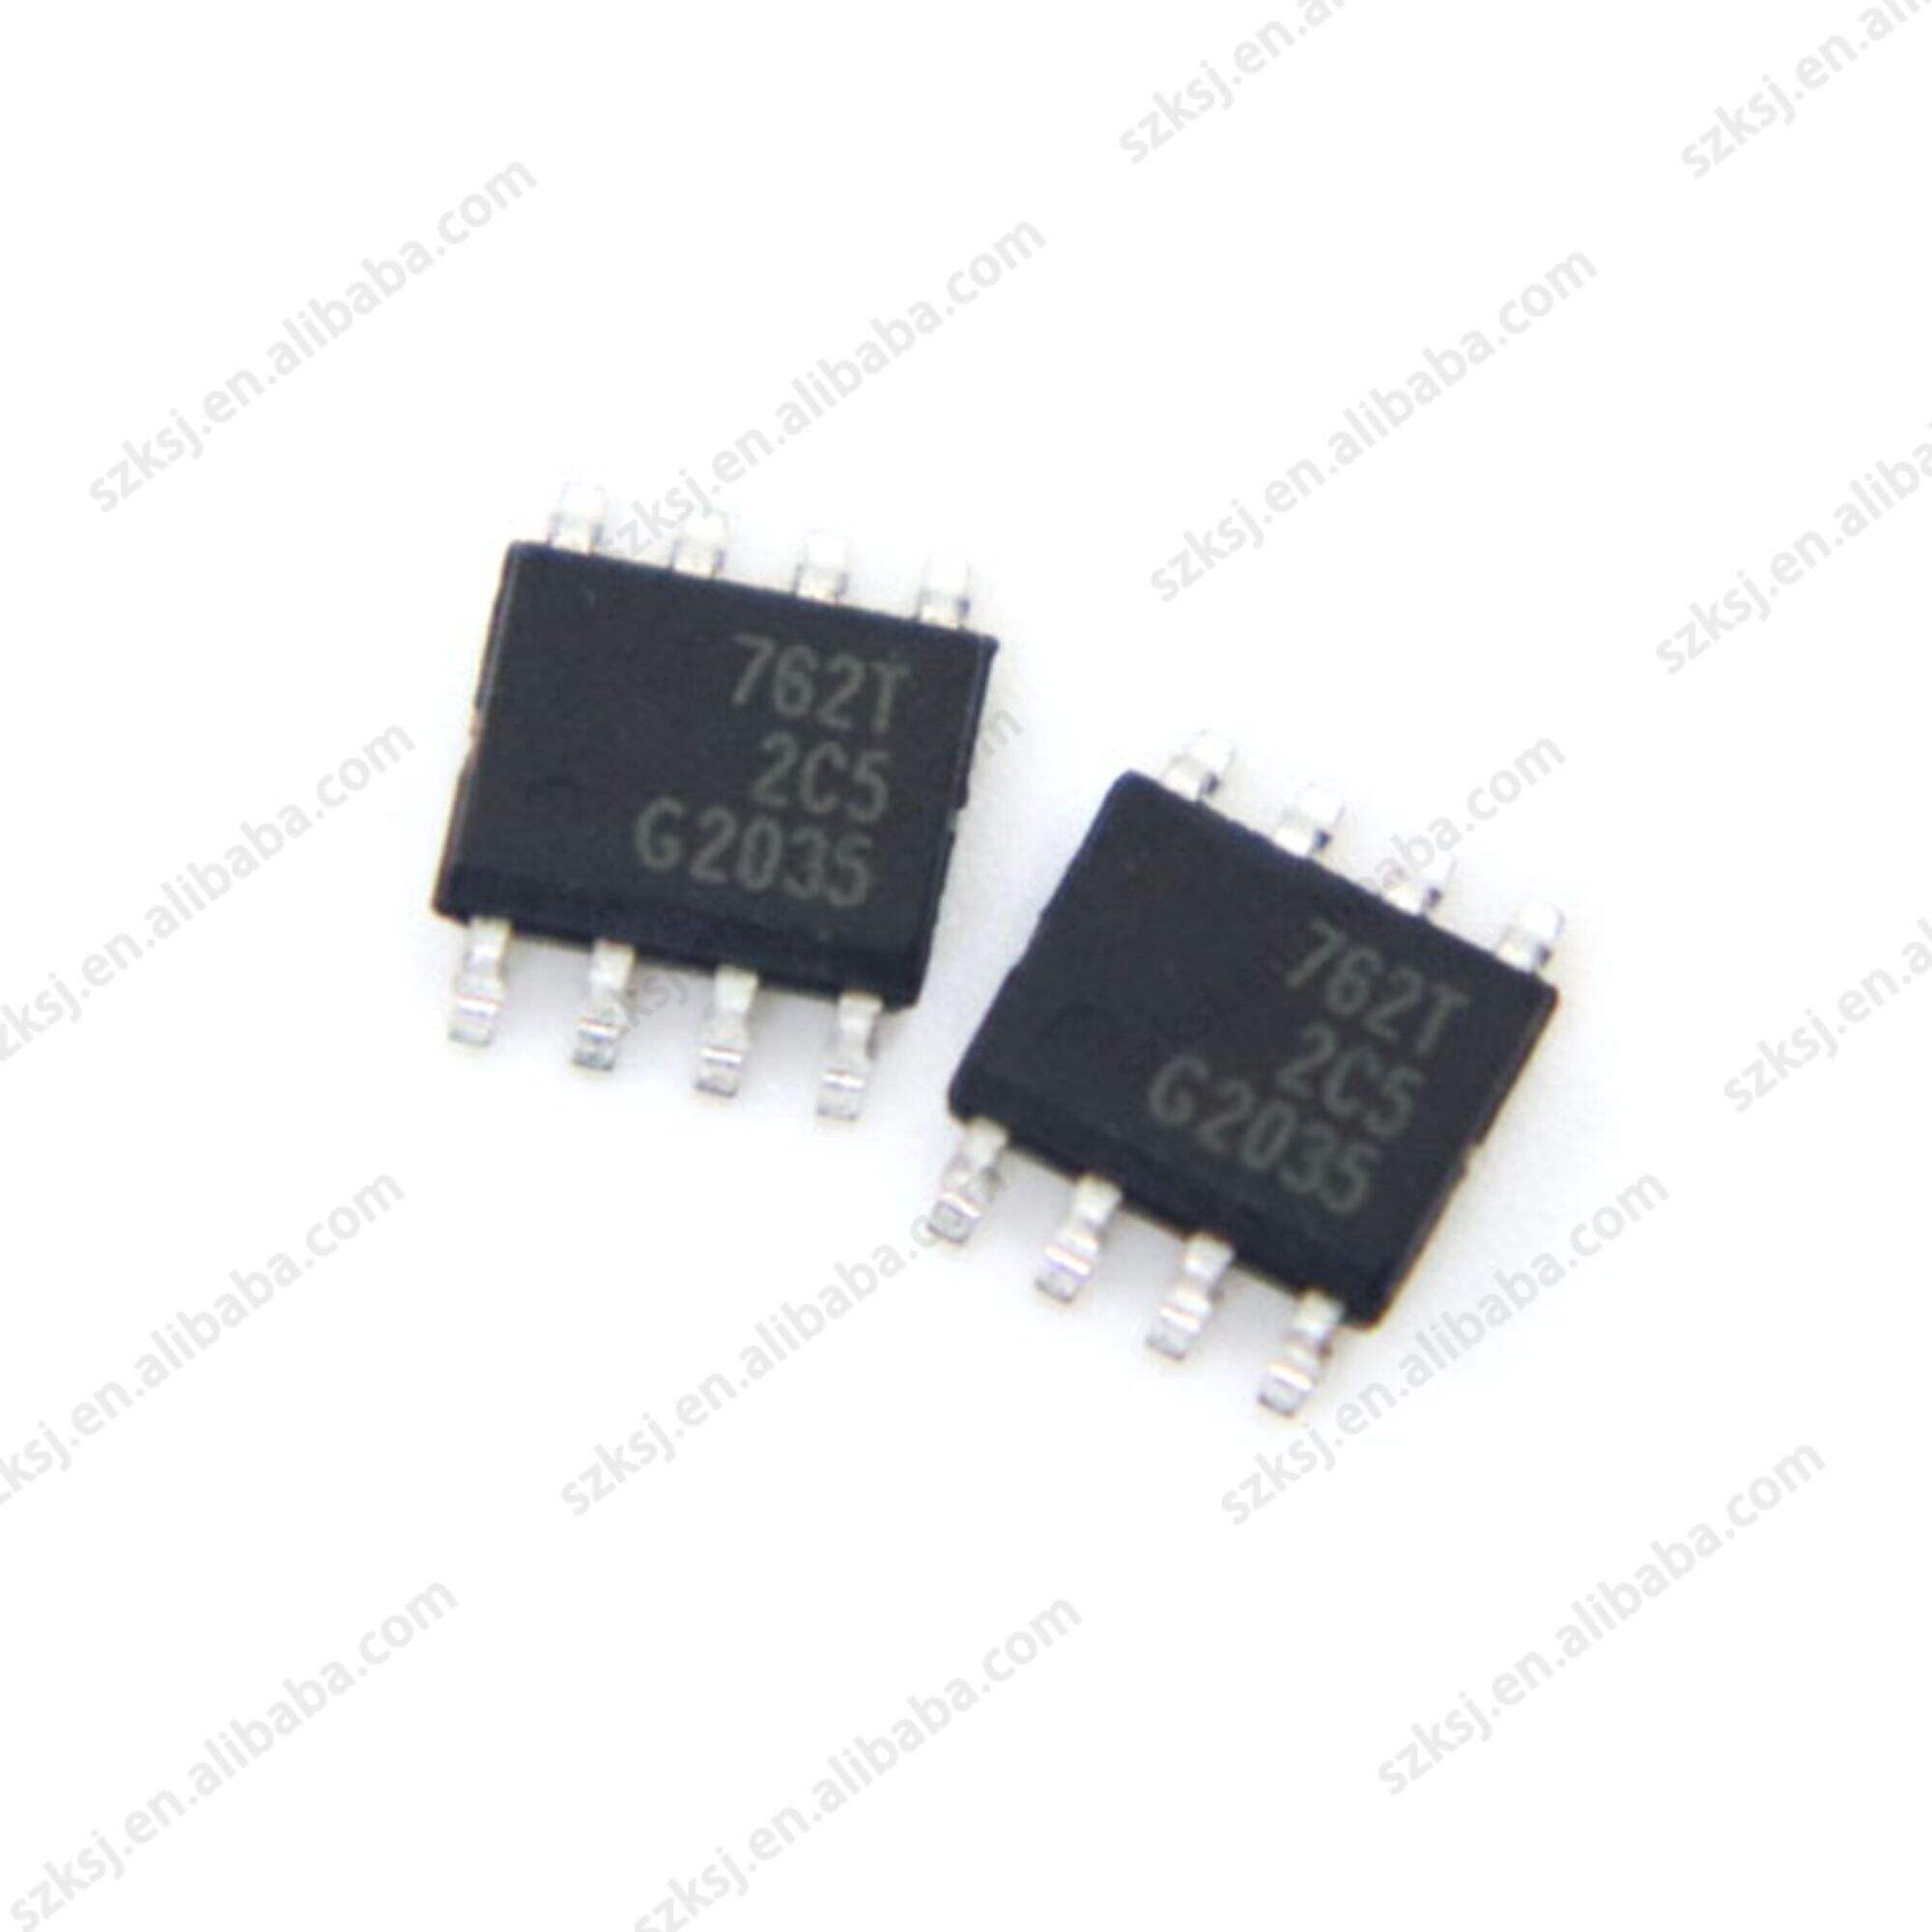 BSP762TXUMA1 BSP762T New original spot intelligent high-side power switch chip 8-SOIC integrated circuit IC